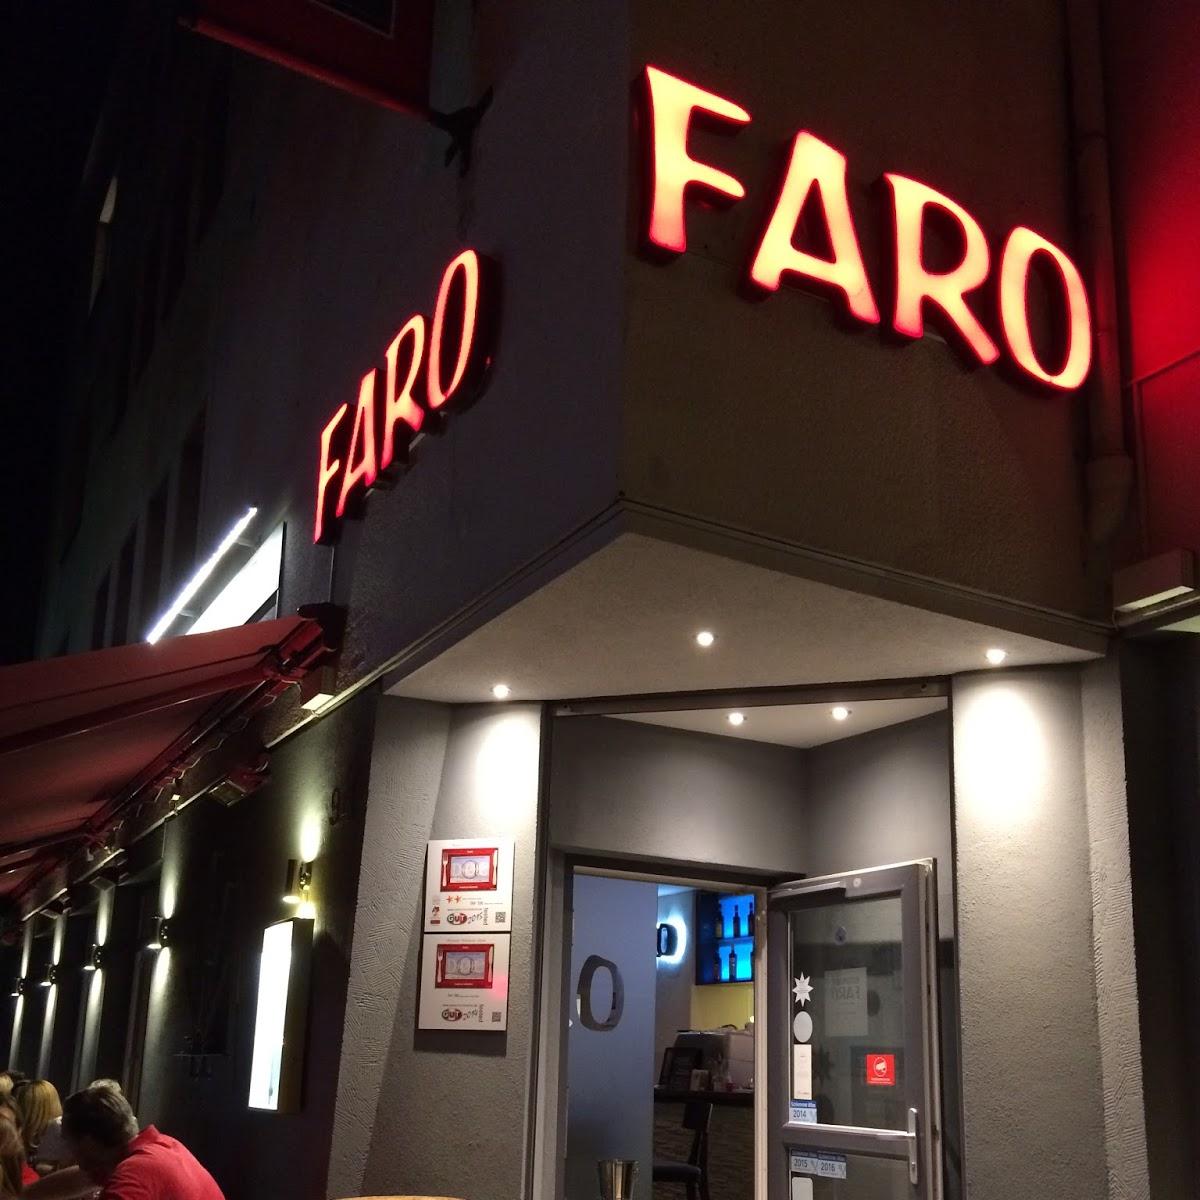 Restaurant "Ristorante Faro" in Köln